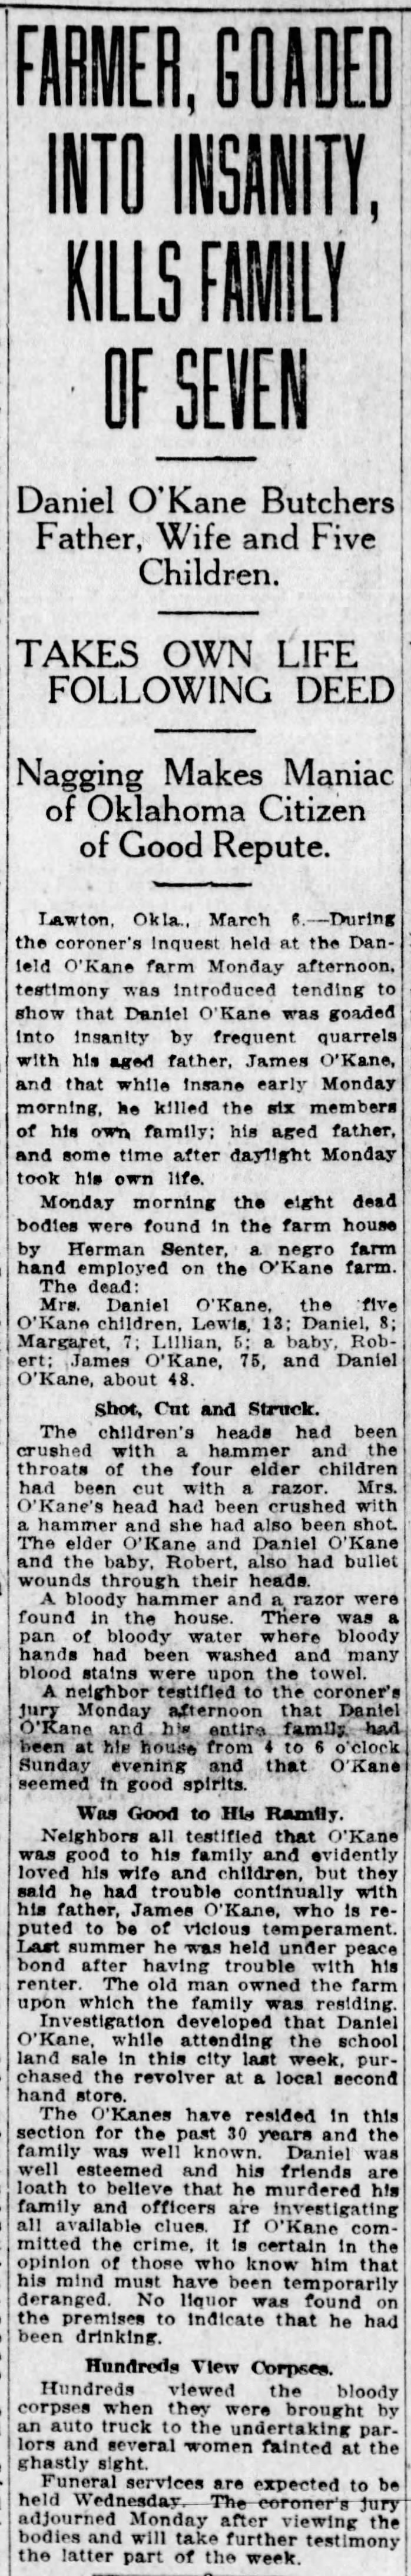 OKane kills family 1916